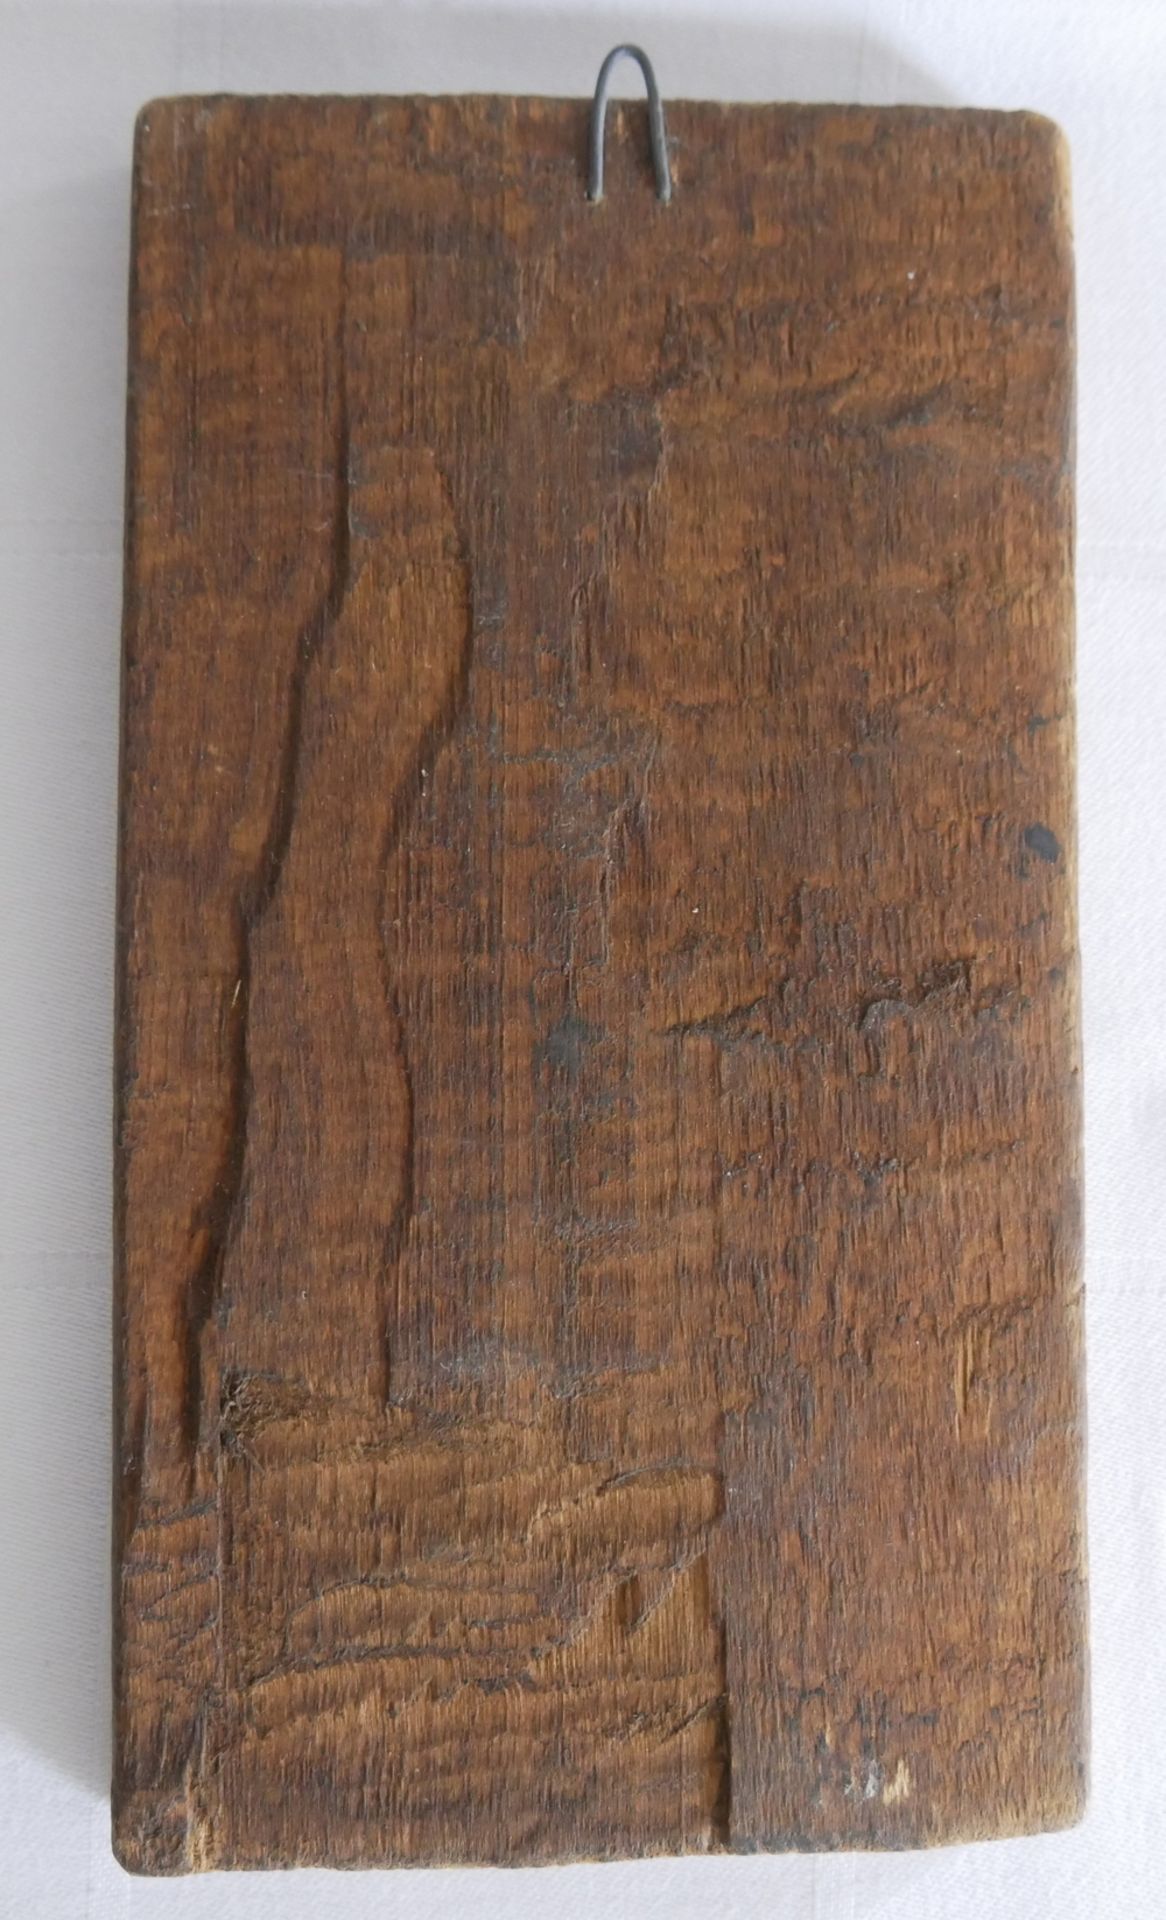 Ikone aus Holz "Taufe Christi". Höhe ca. 20 cm, Breite ca. 11 cm - Bild 2 aus 2